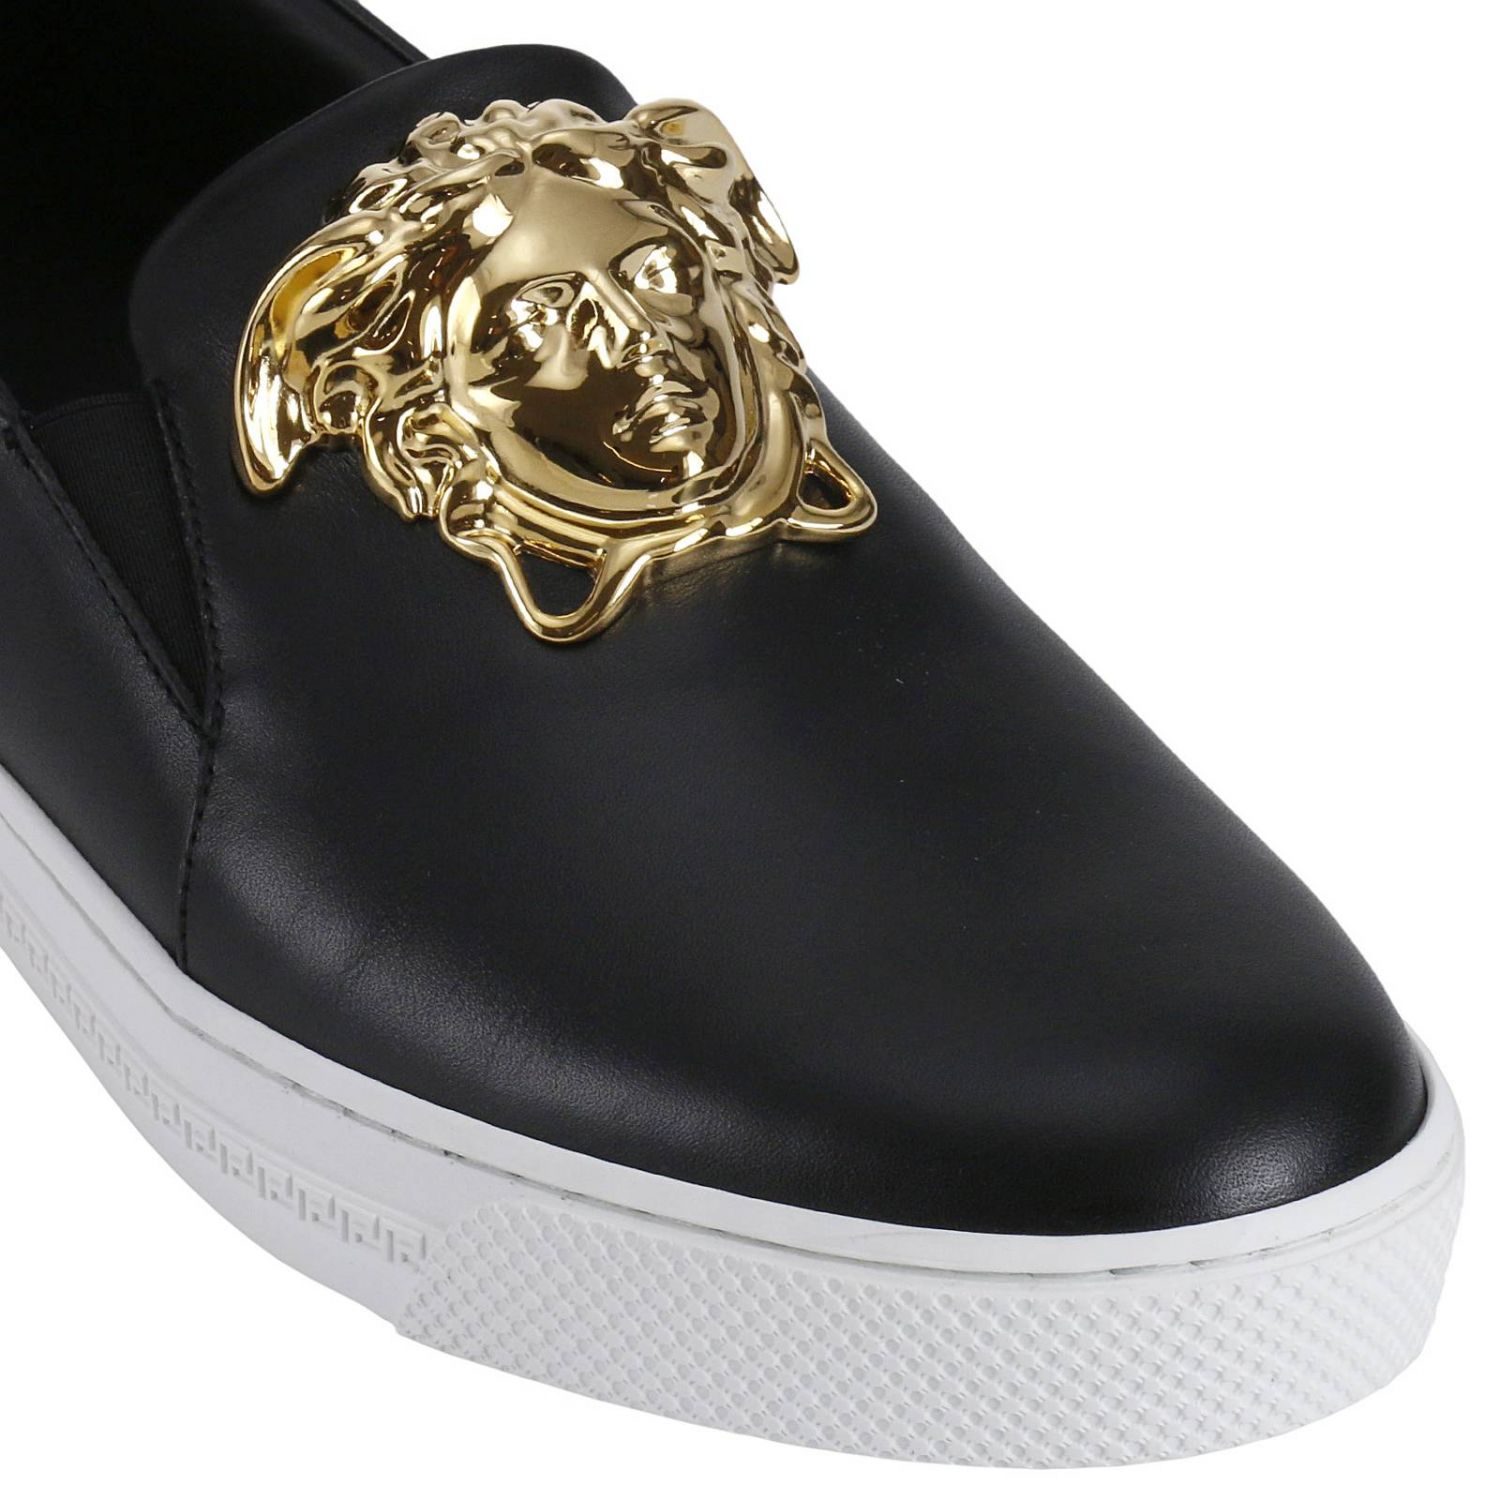 Versace Outlet: Shoes men | Sneakers Versace Men Black | Sneakers ...